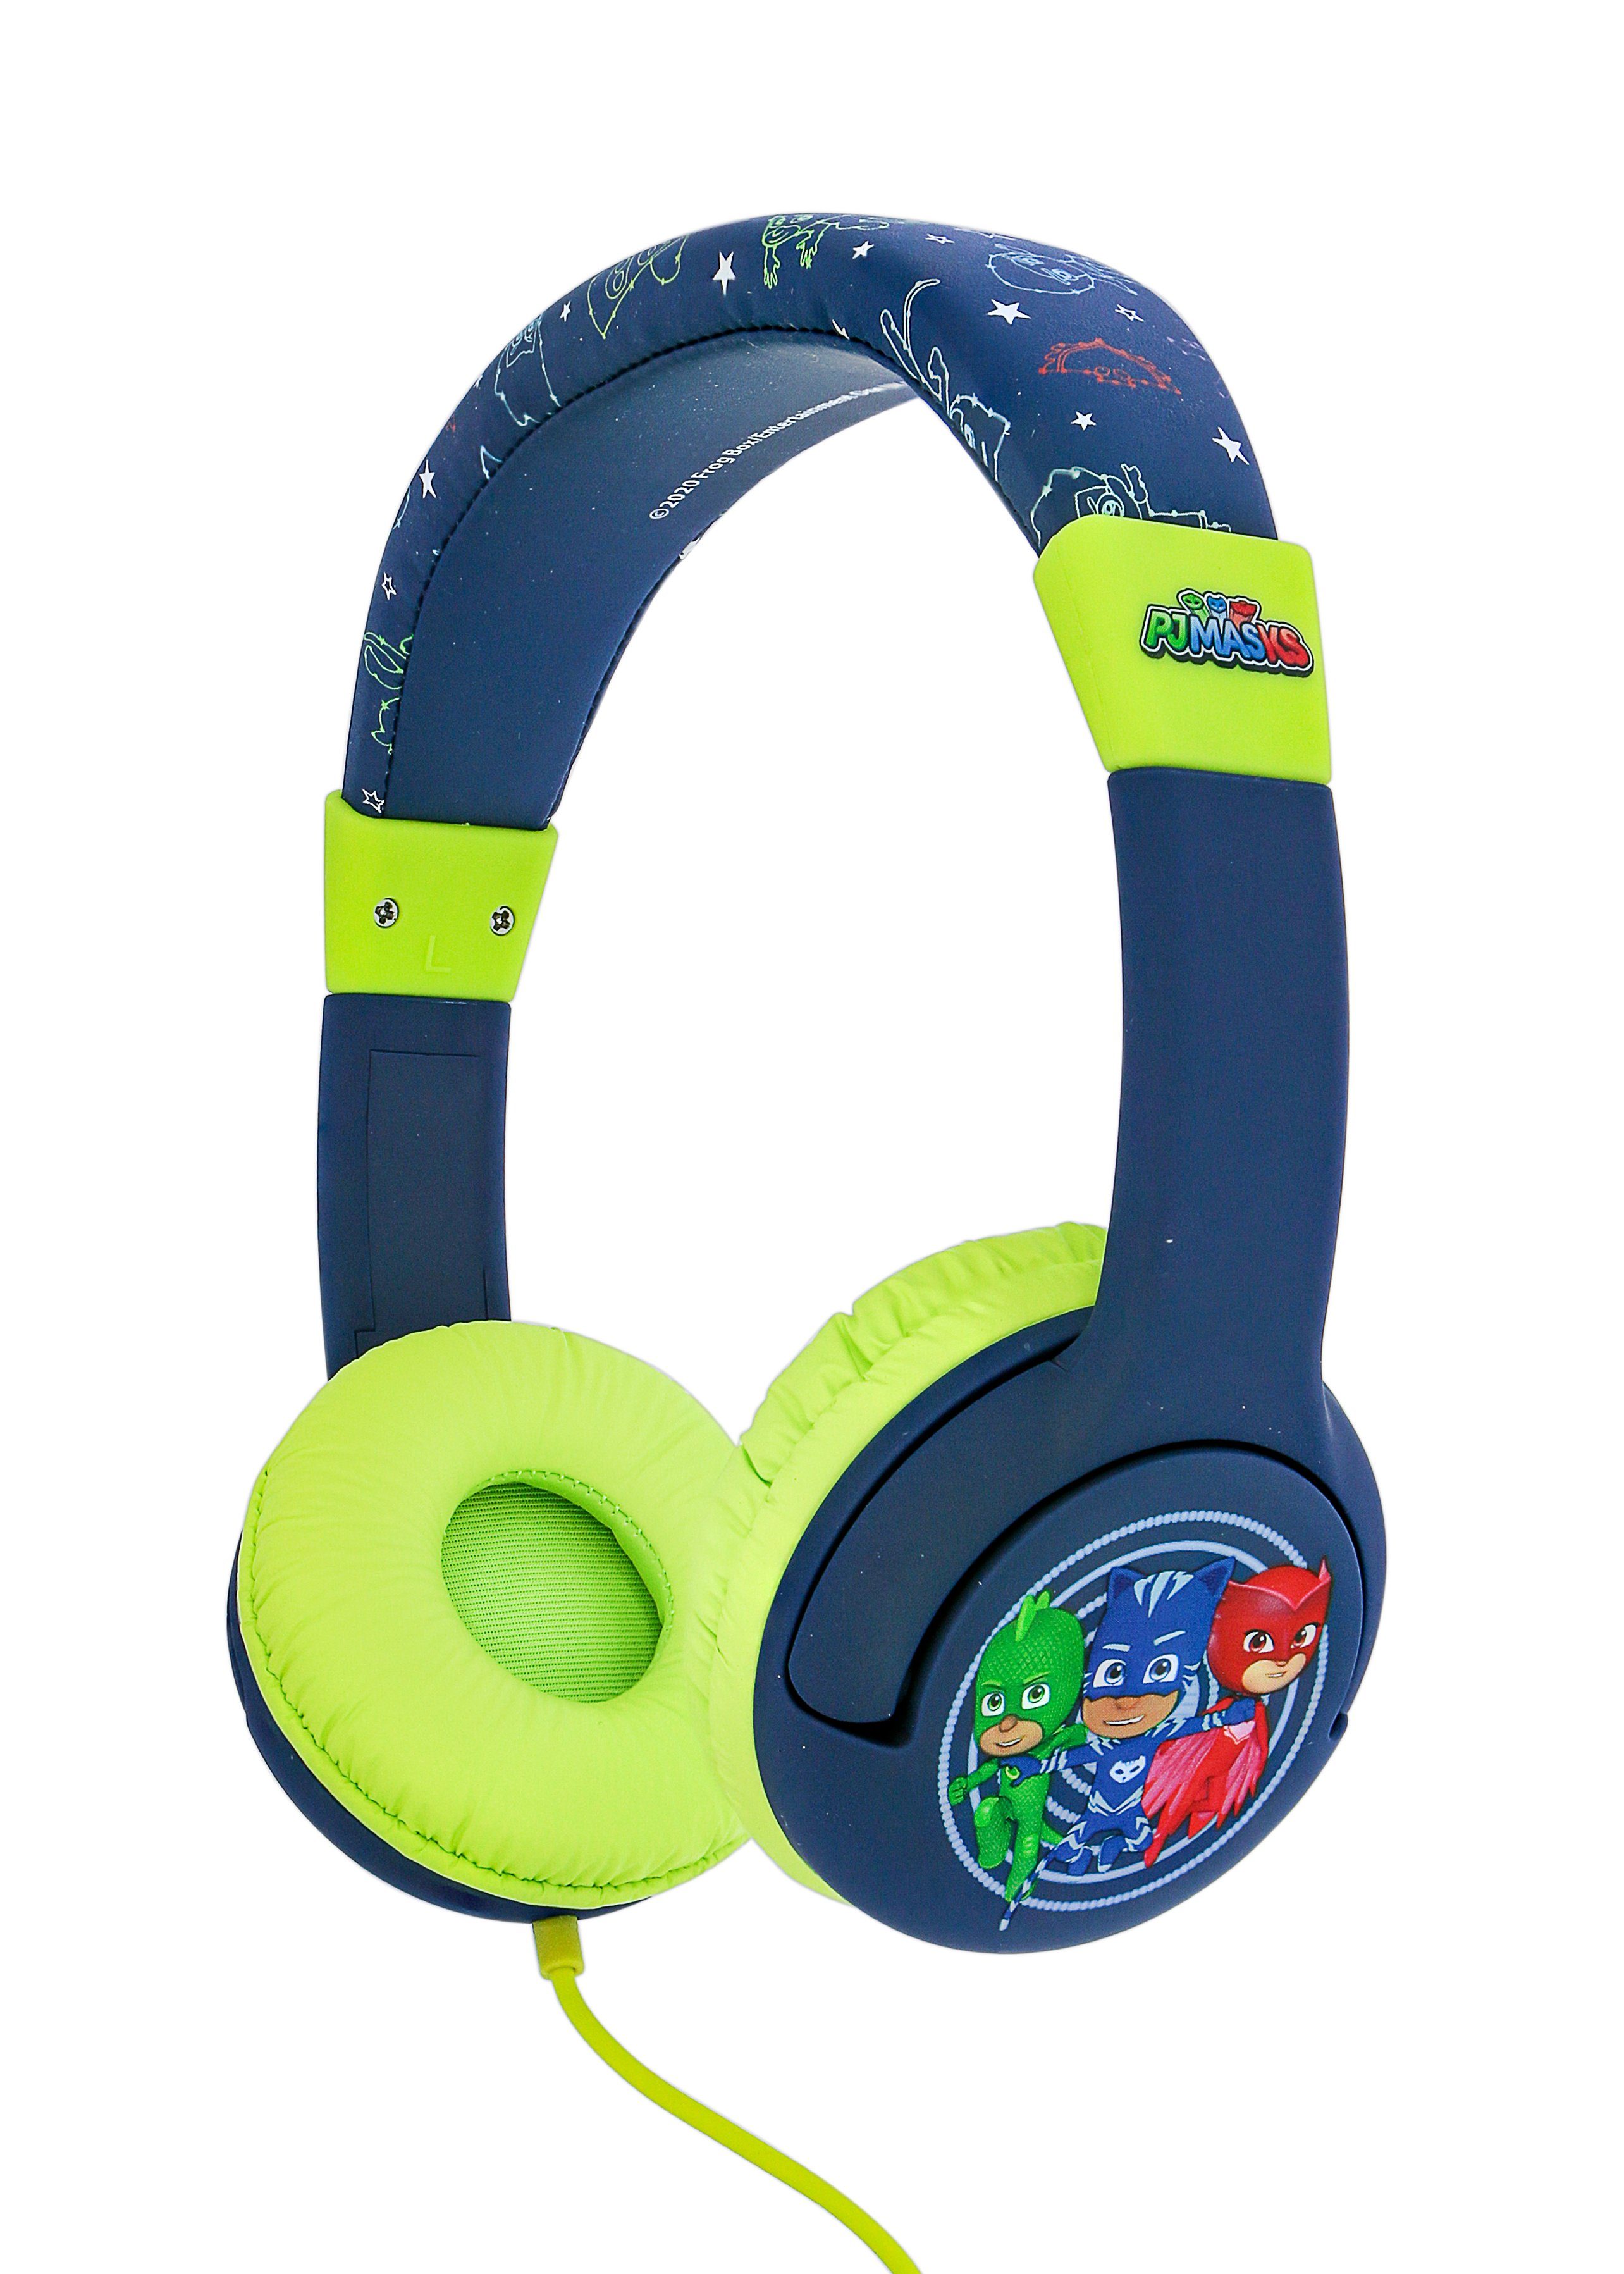 OTL PJ Merchandise) Kinder Kopfhörer Masks (Offiziell lizensiertes Kinder-Kopfhörer